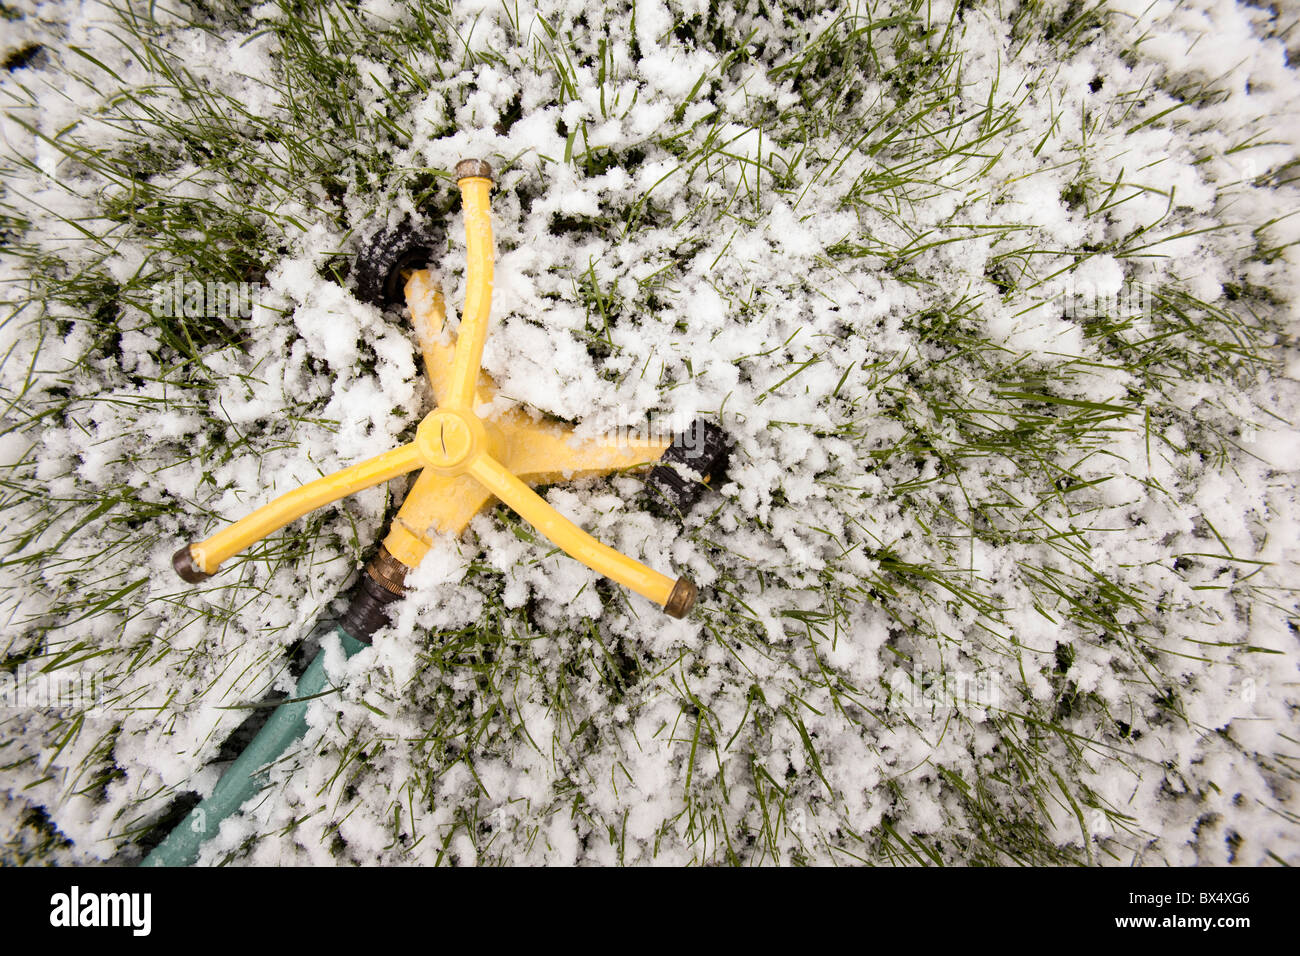 Sprinkler On Snow And Grass; Edmonton, Alberta, Canada Stock Photo